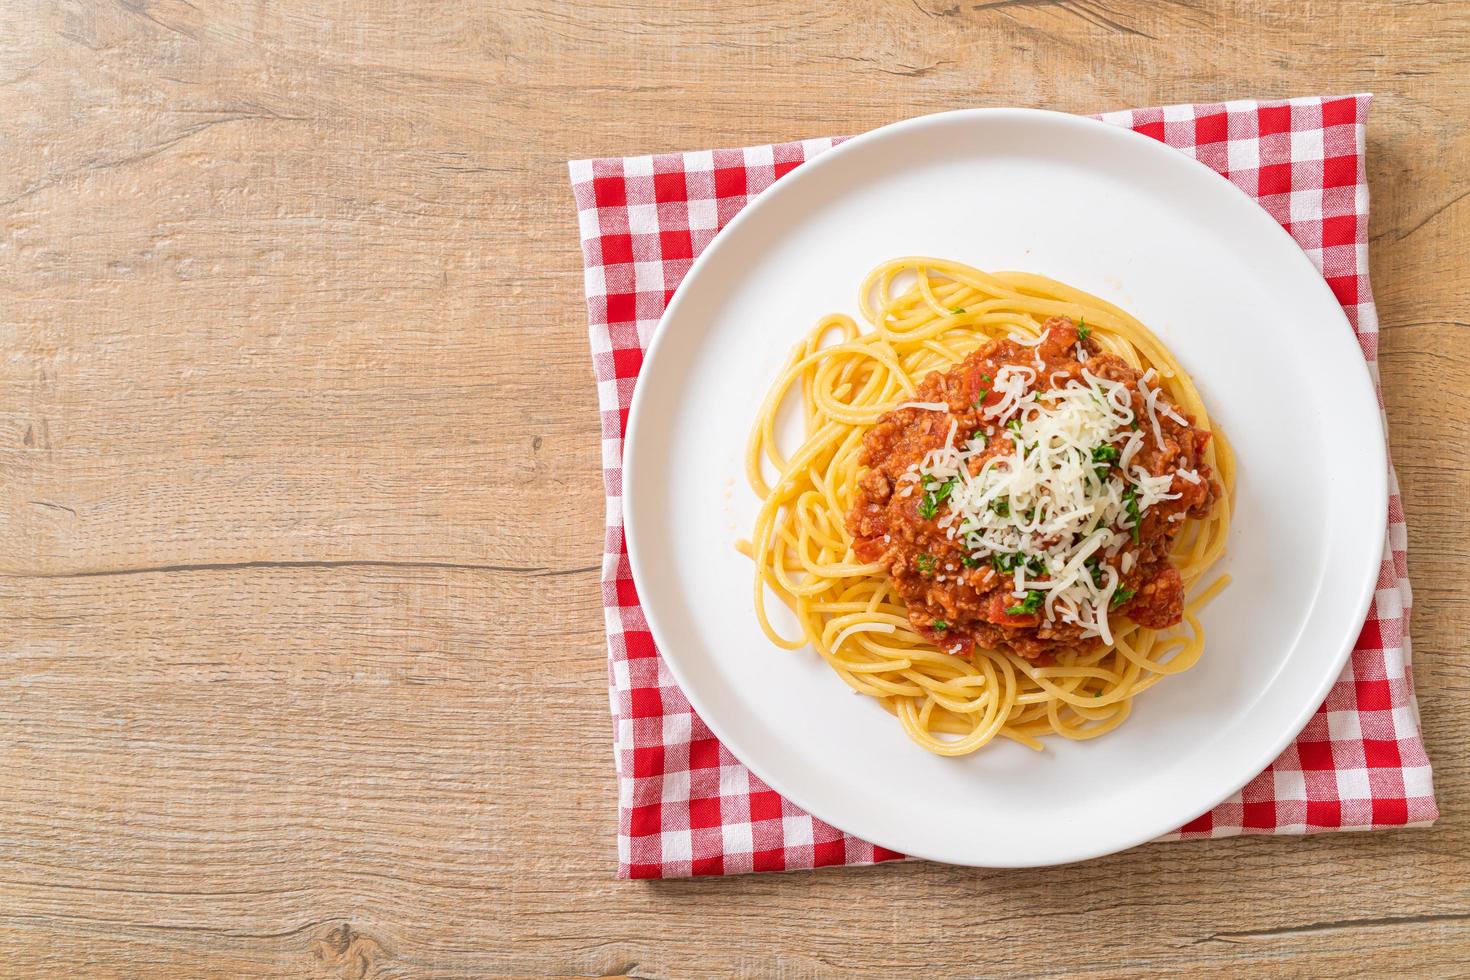 Spaghetti bolognese varkensvlees of spaghetti met tomatensaus van gehakt varkensvlees - Italiaanse eetstijl foto